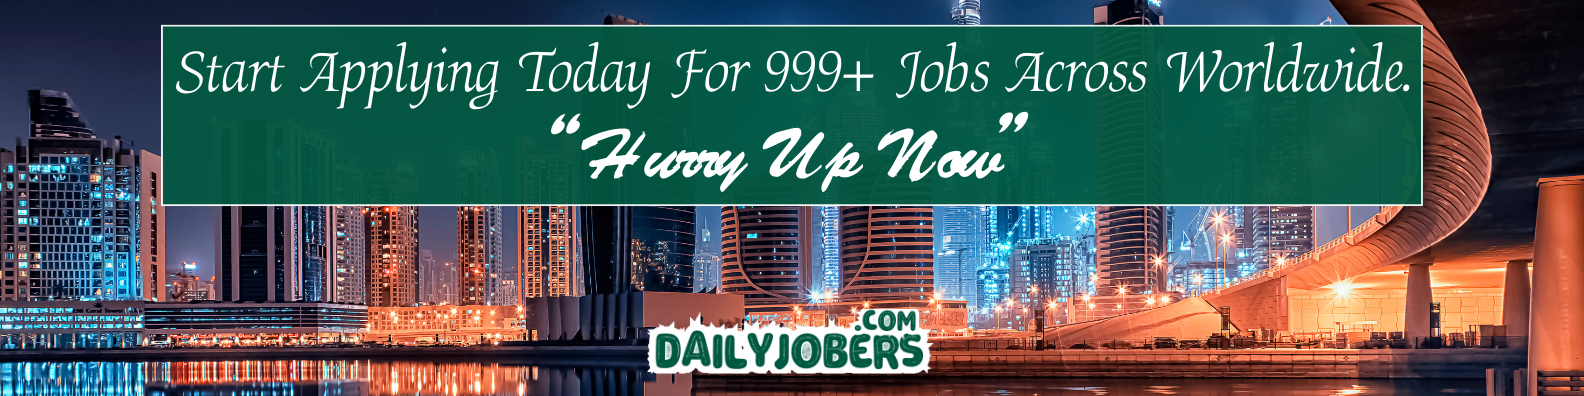 Dailyjobers.com - Worldwide Jobs